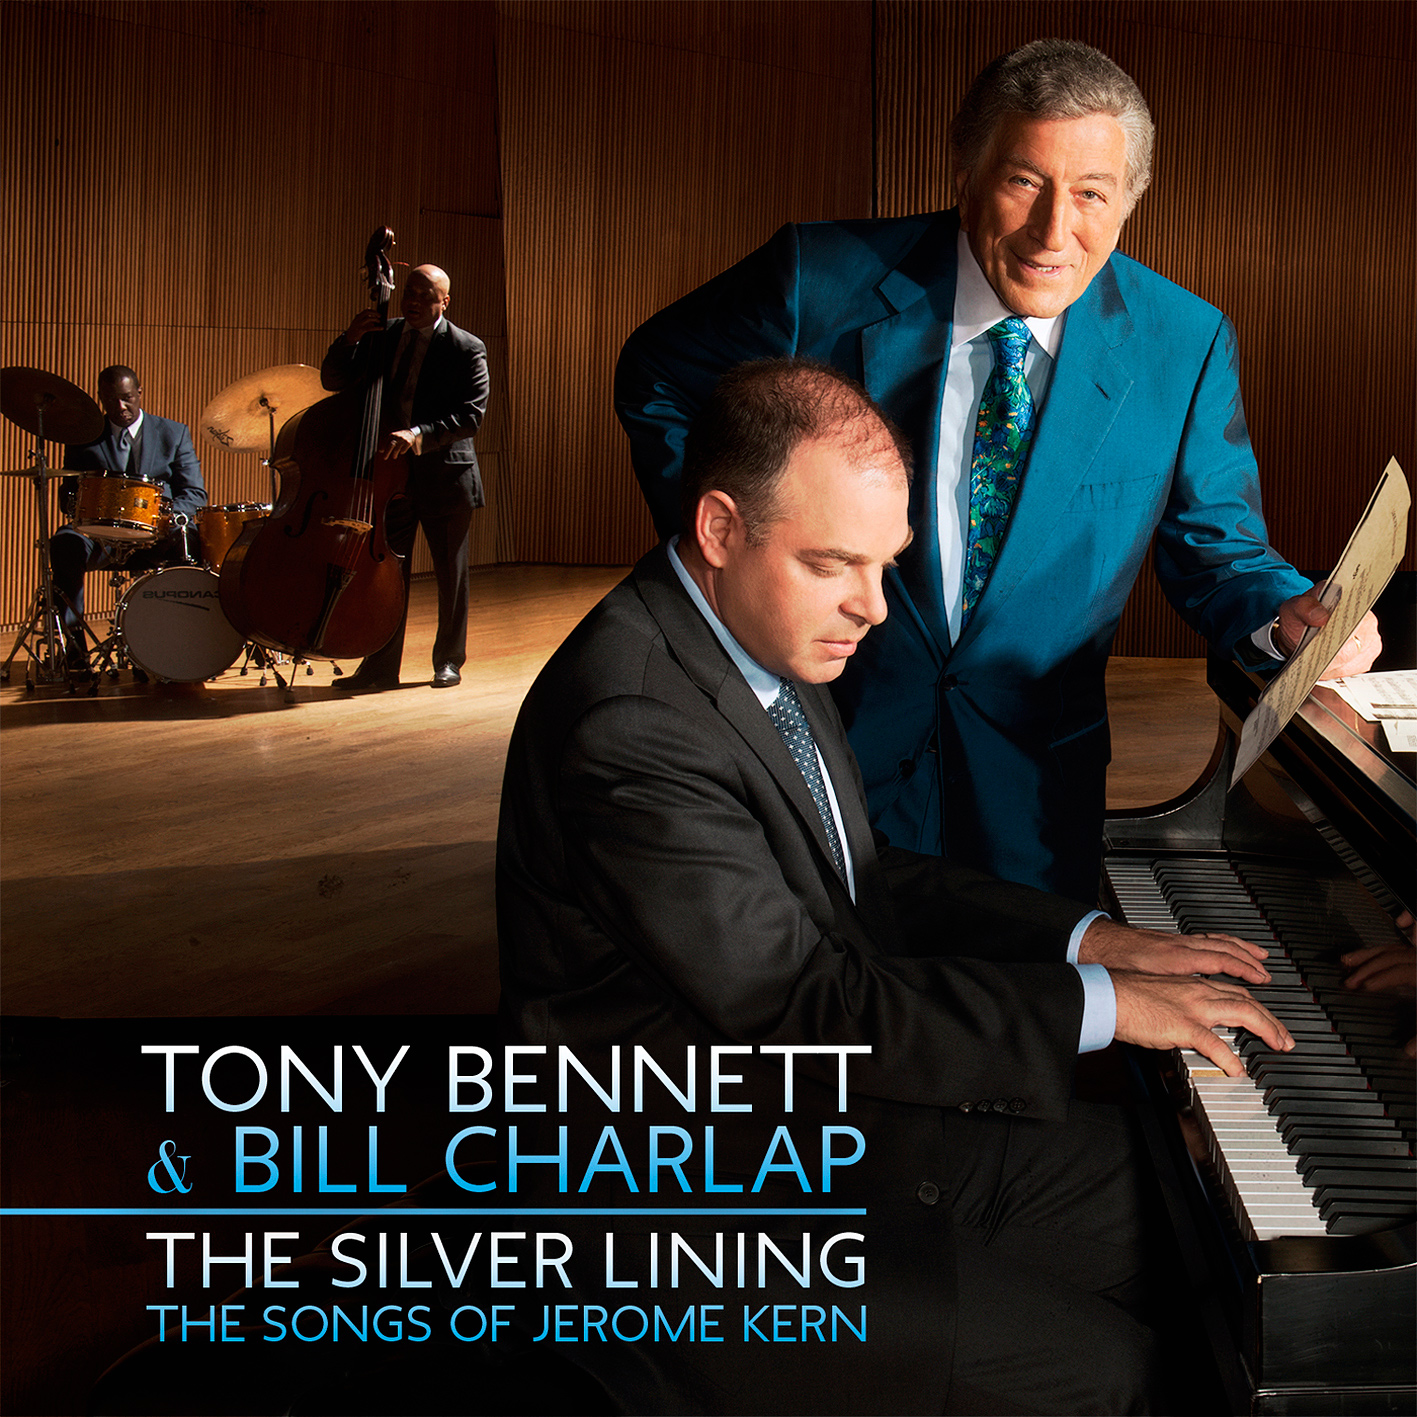 Tony Bennett & Bill Charlap - The Silver Lining: The Songs Of Jerome Kern (2015) [HDTracks FLAC 24bit/96kHz]